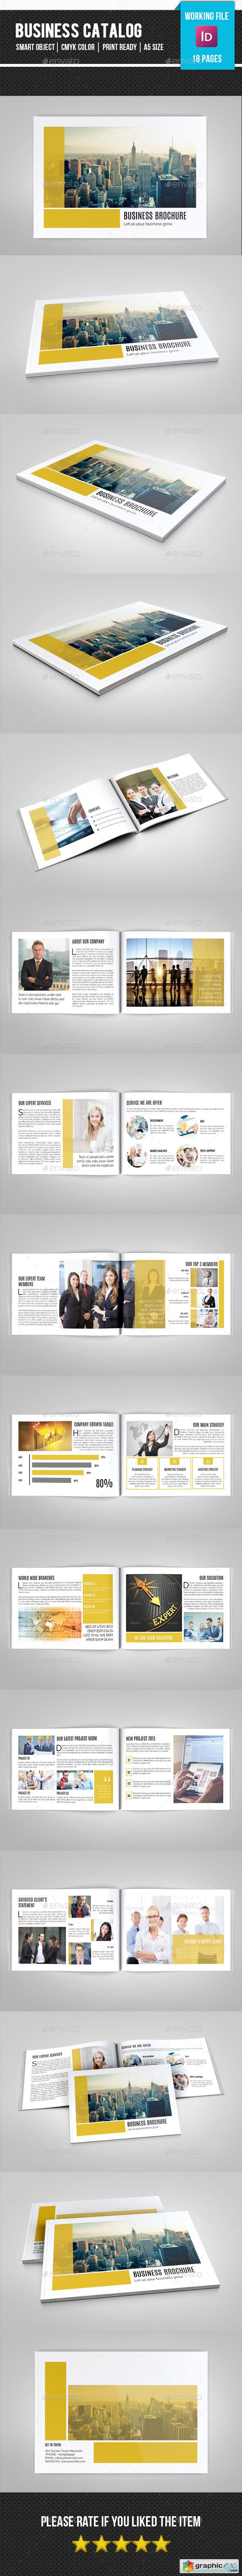 Business Catalog Brochure-V166